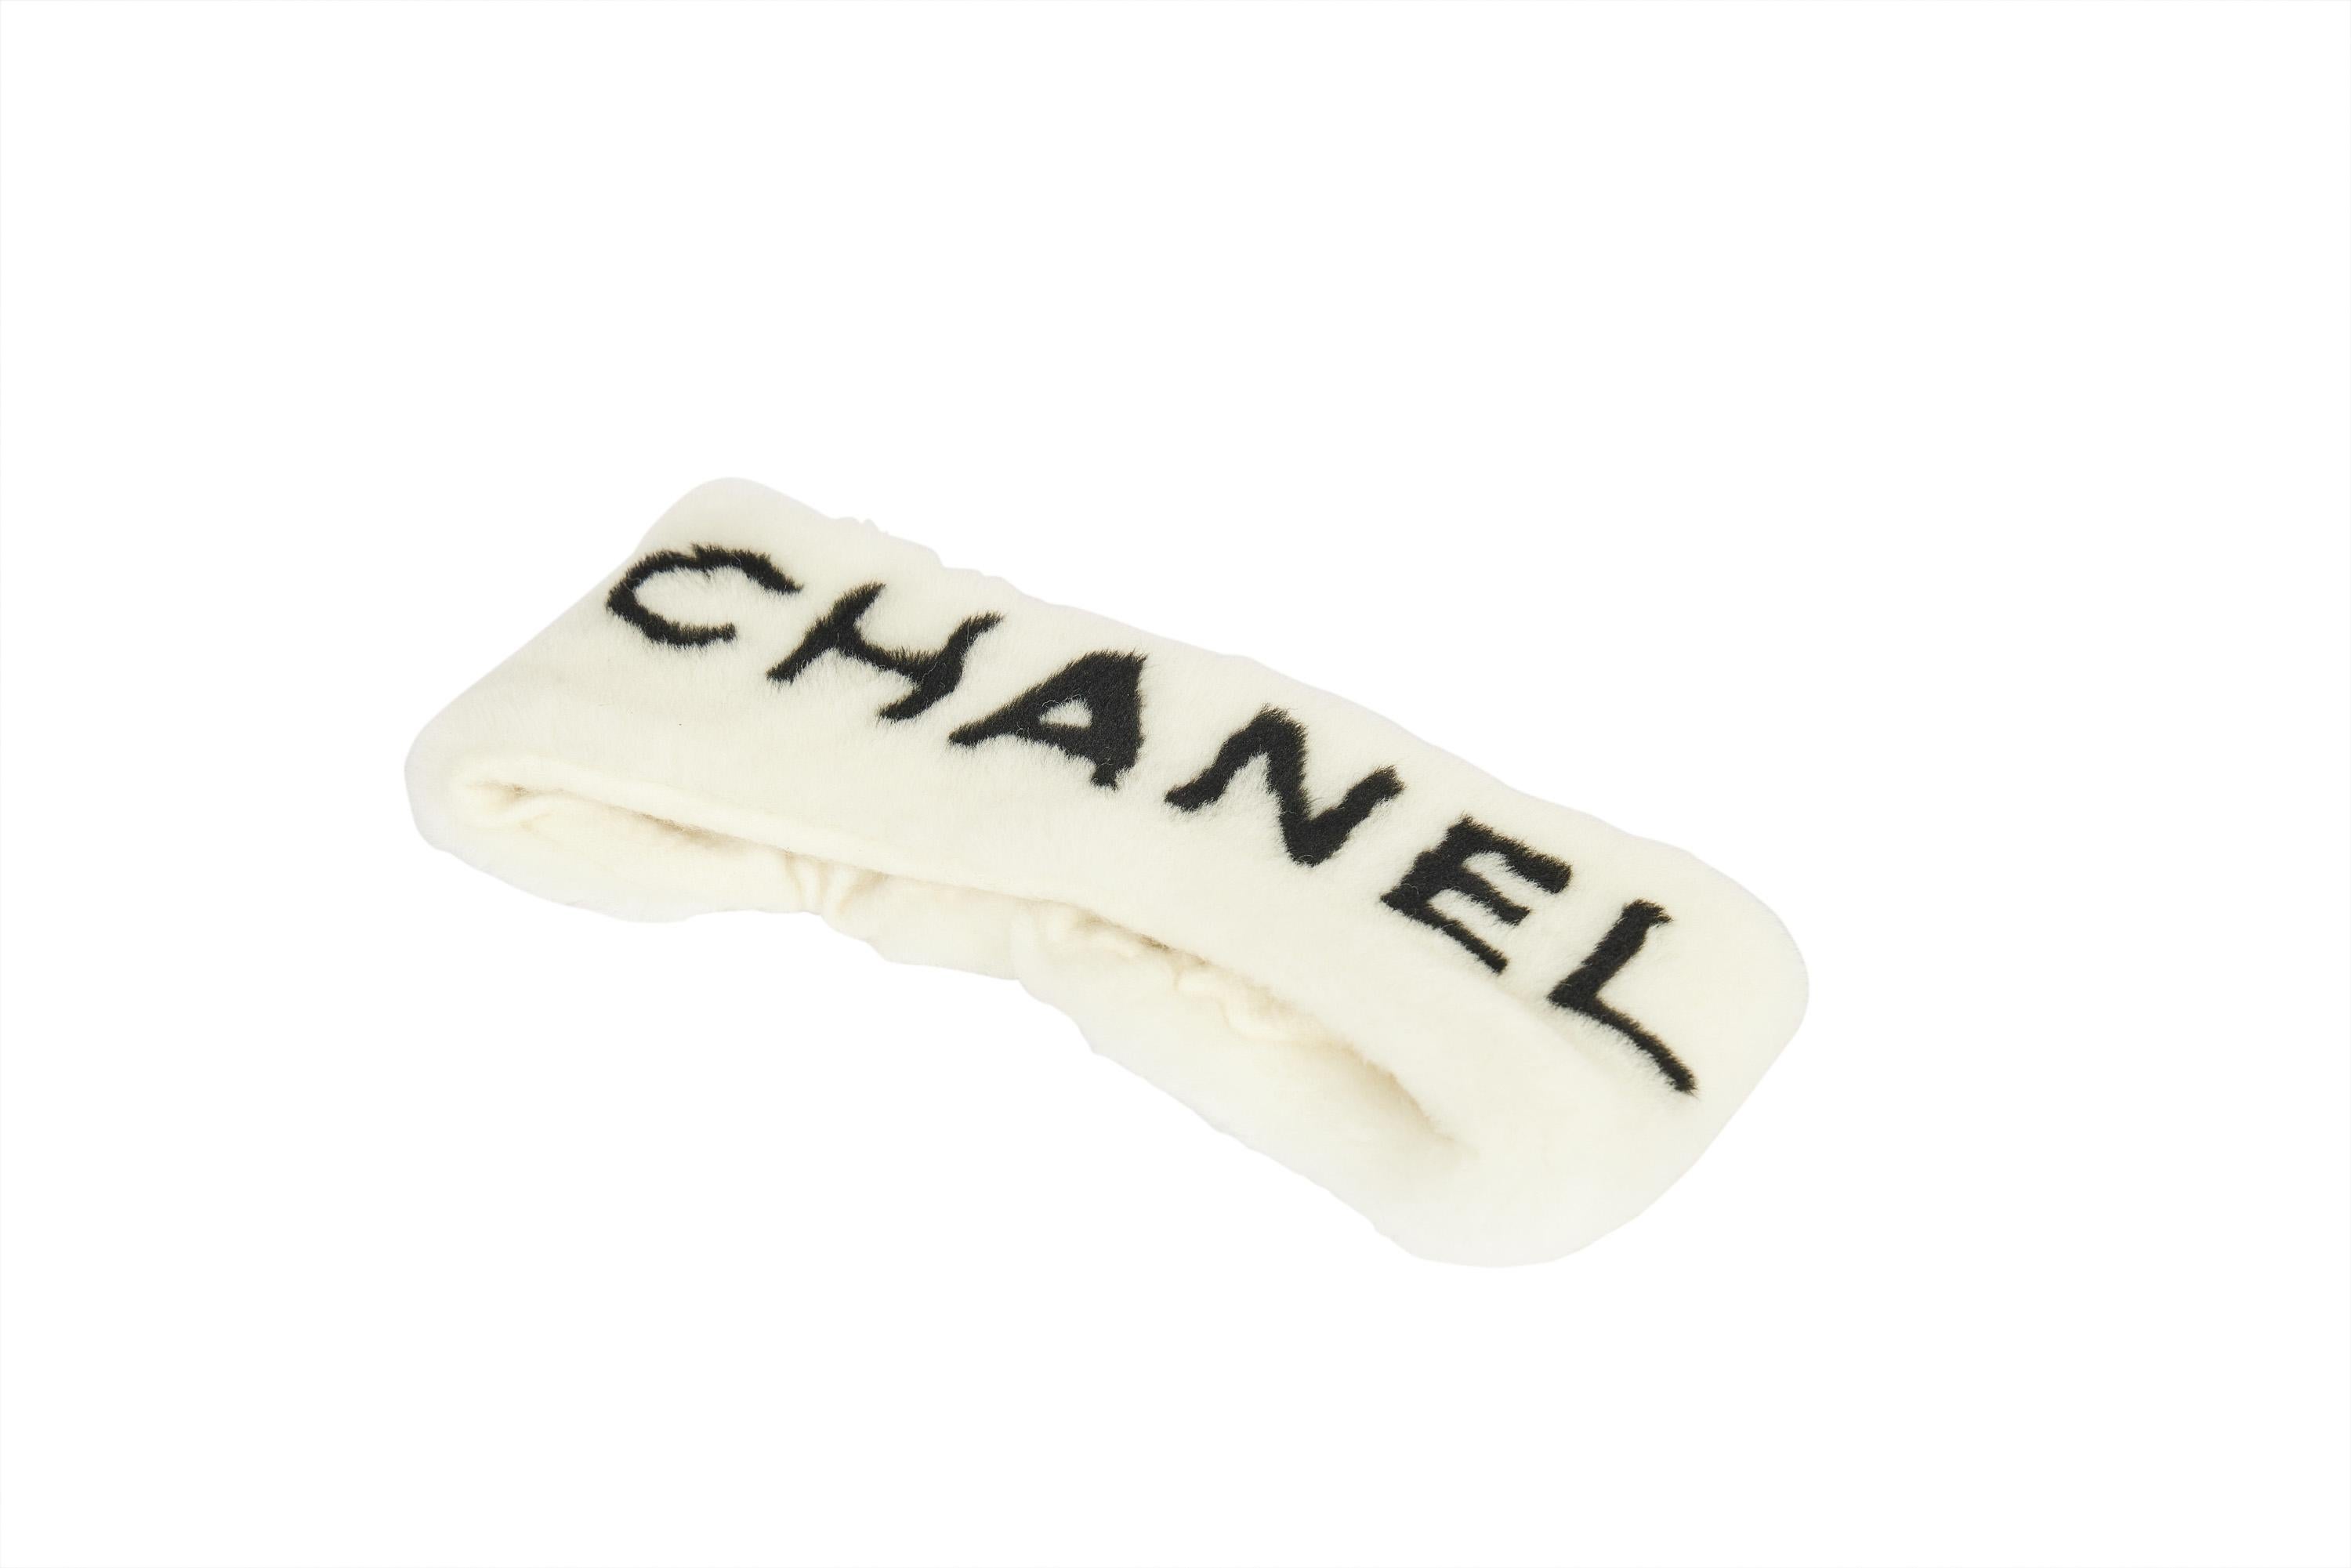 Bandeau Chanel blanc en peau de mouton, neuf dans sa boîte en vente 1